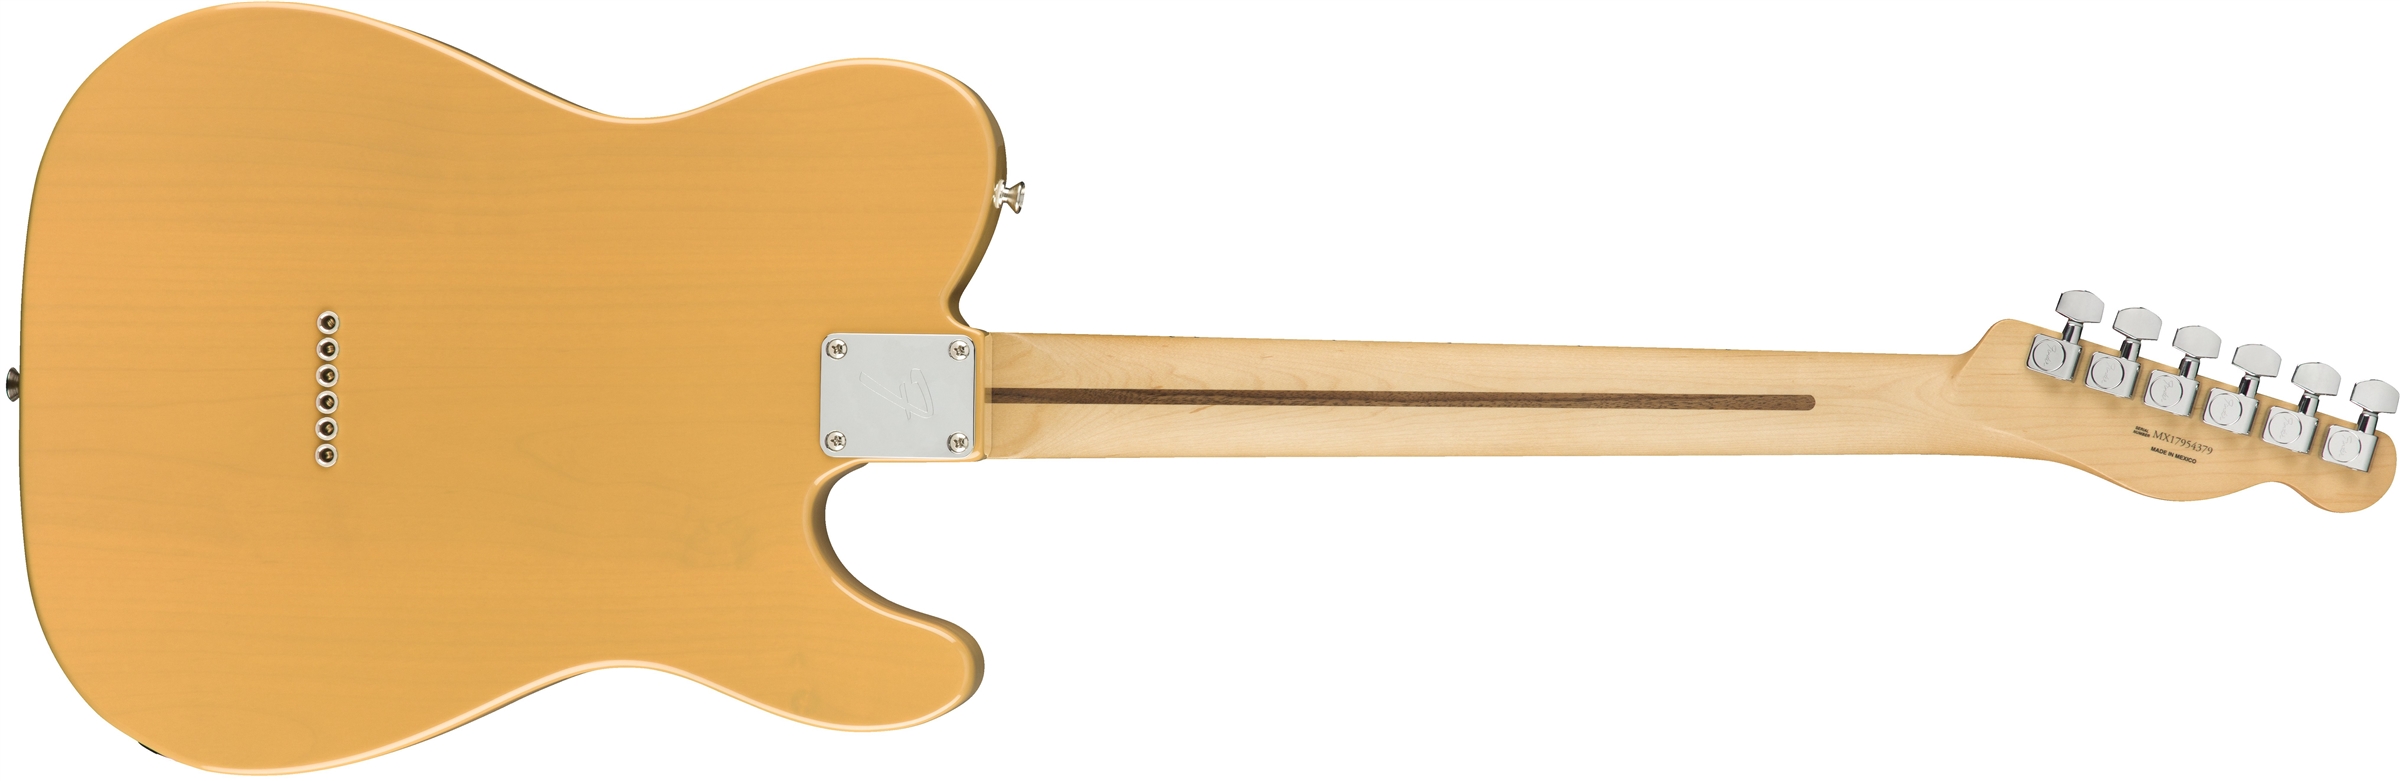 Fender Tele Player Lh Gaucher Mex 2s Mn - Butterscotch Blonde - Left-handed electric guitar - Variation 1